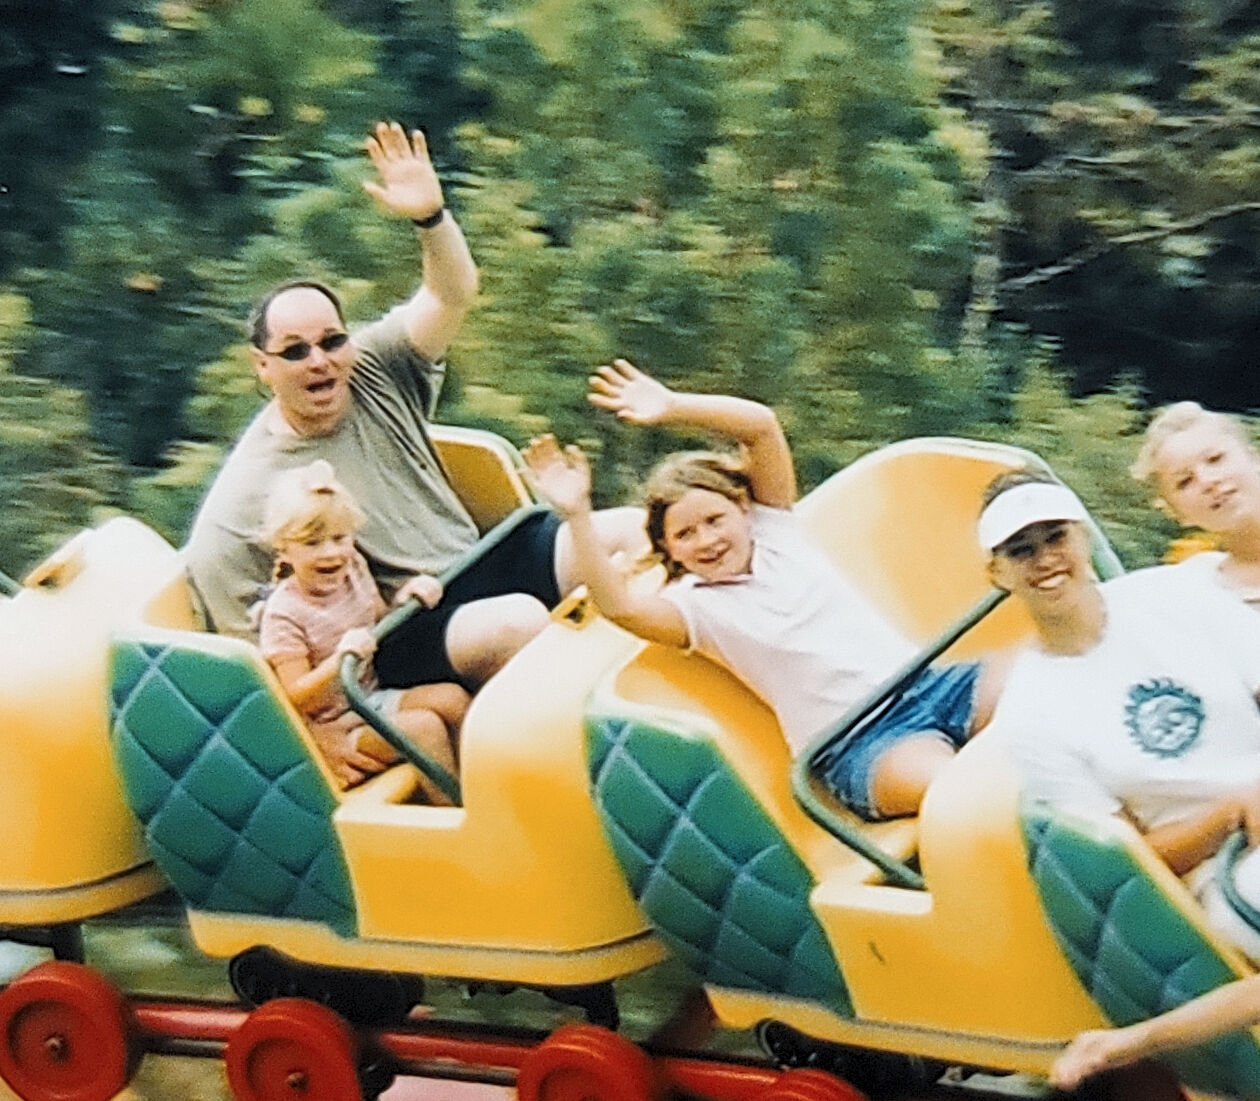 Enjoying Disney World roller coaster.
2004